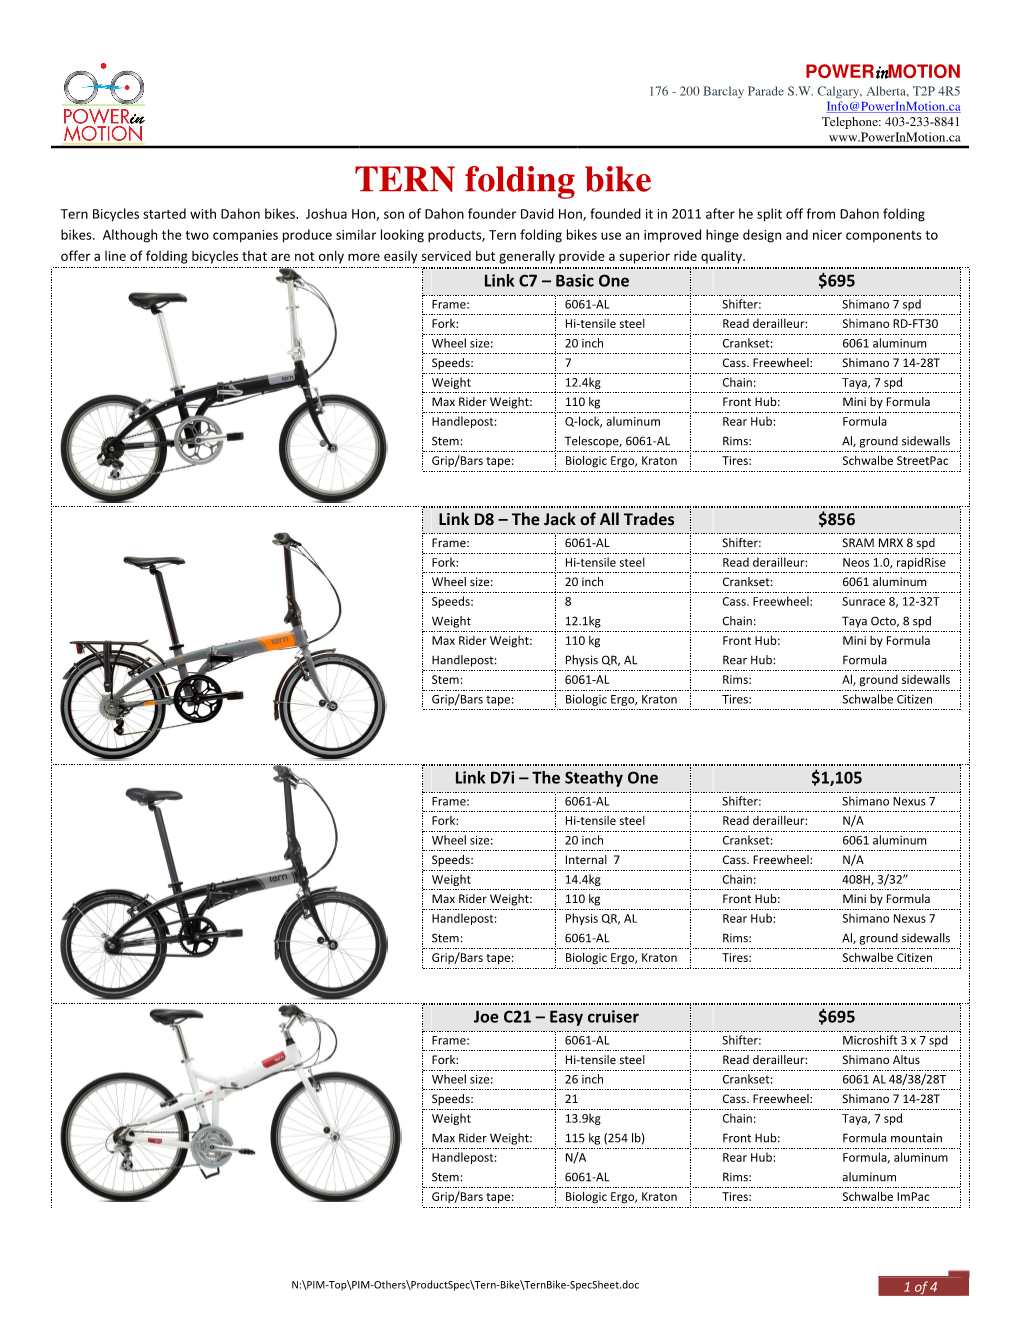 TERN Folding Bike Tern Bicycles Started with Dahon Bikes